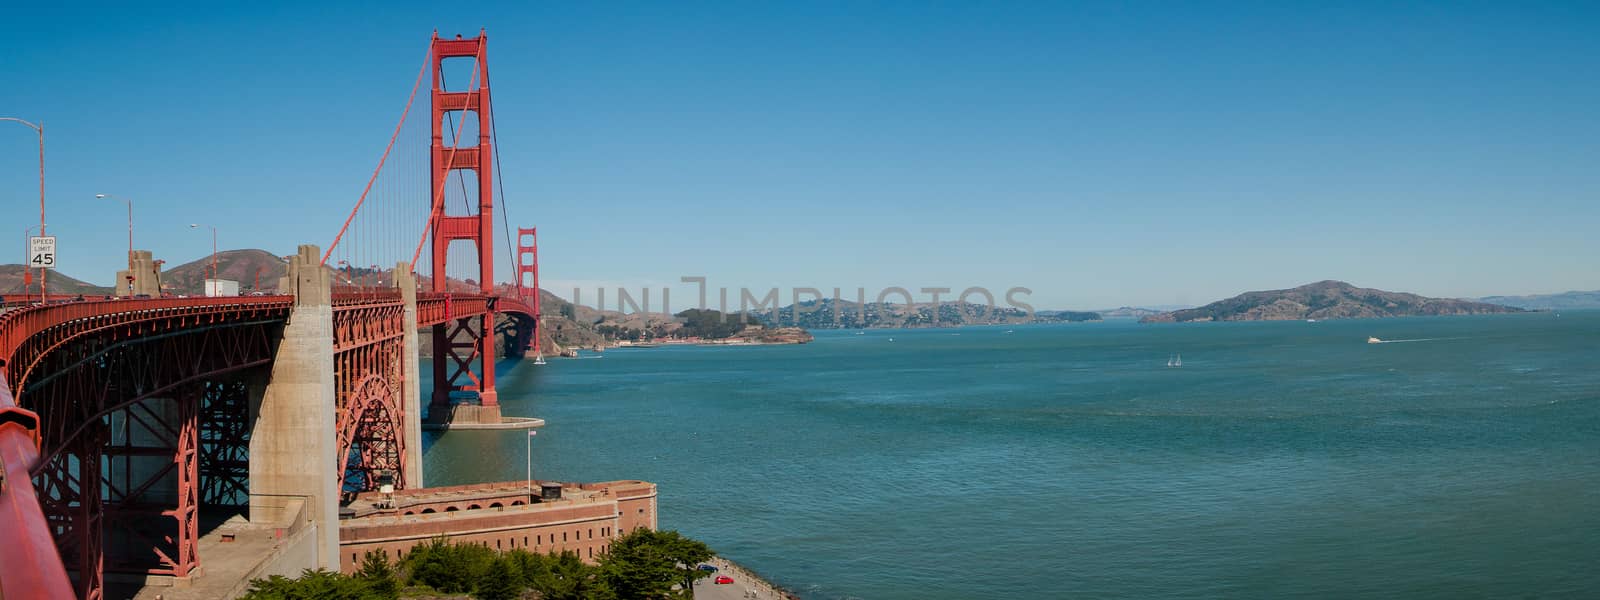 Golden Gate Bridge in San Francisco, California, USA 2013